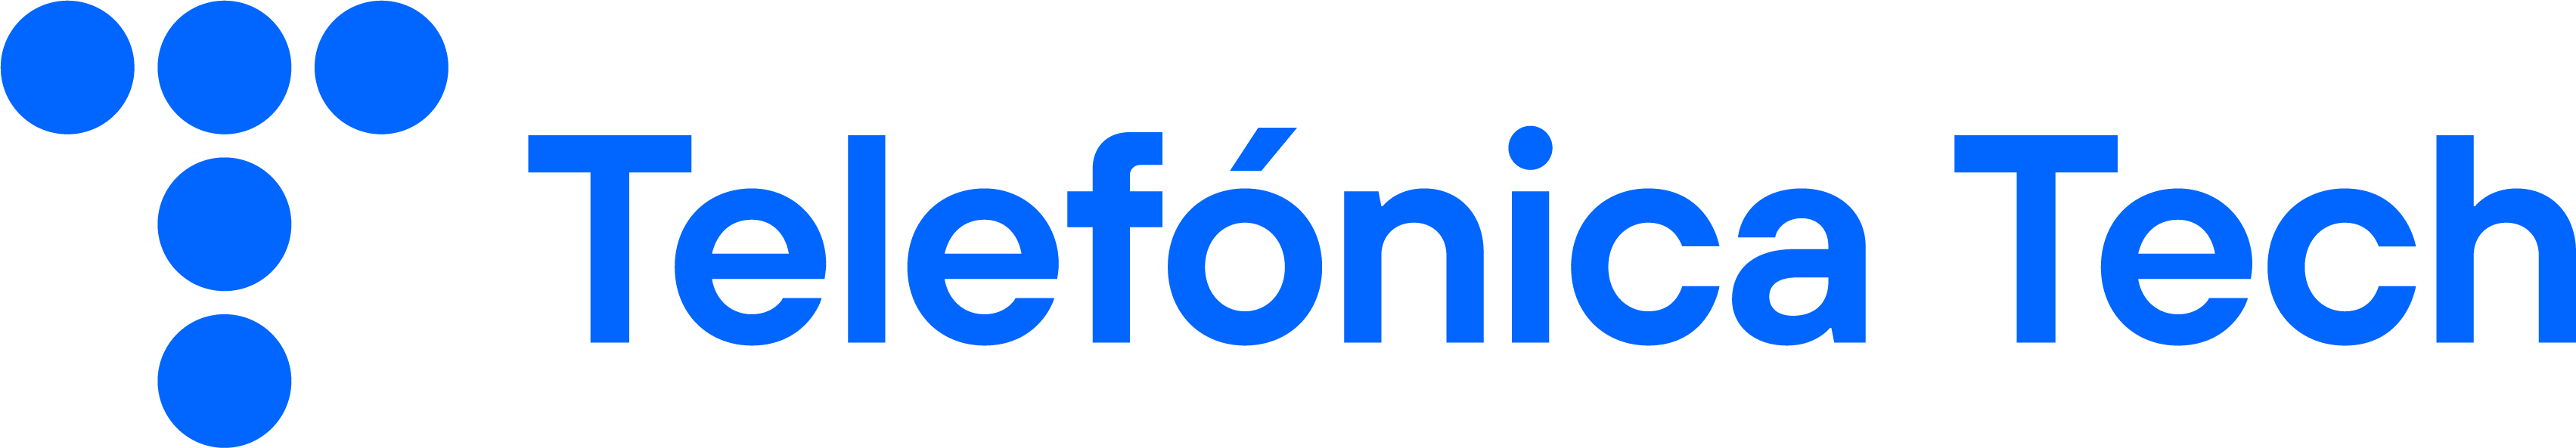 telefonica-tech-logo-positive